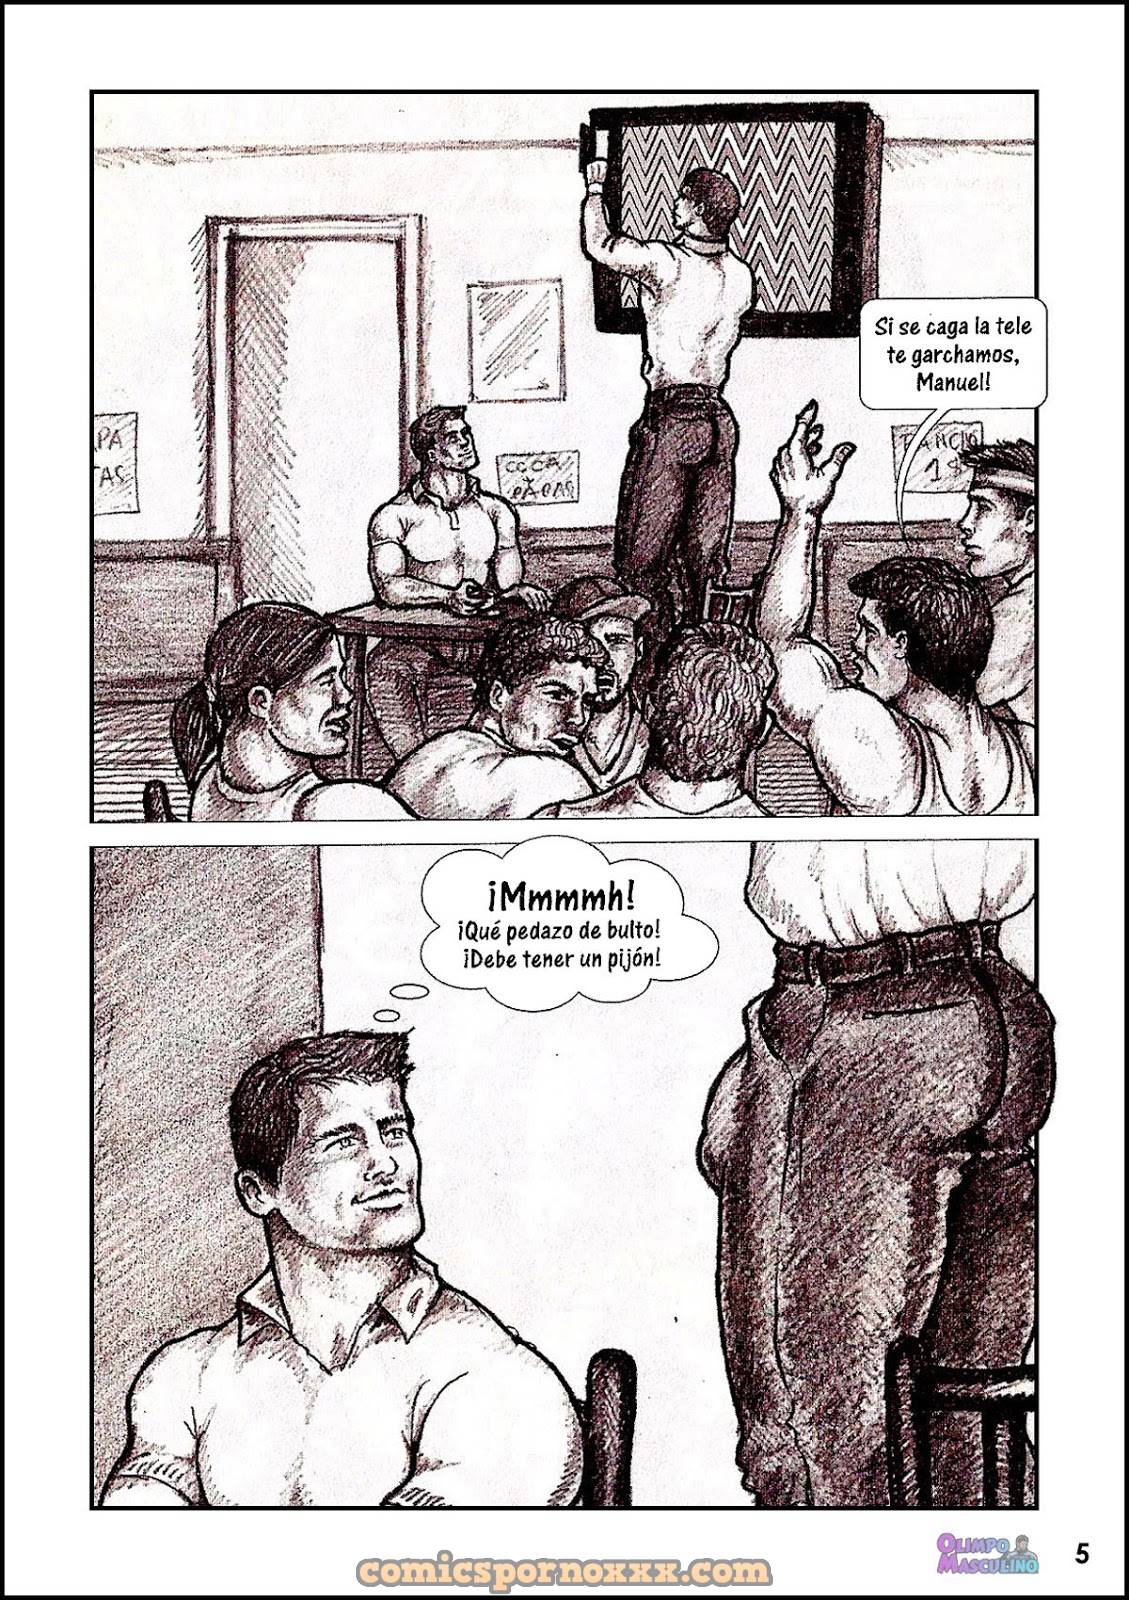 La Hinchada (Sexo Gay Argentino) - 5 - Comics Porno - Hentai Manga - Cartoon XXX